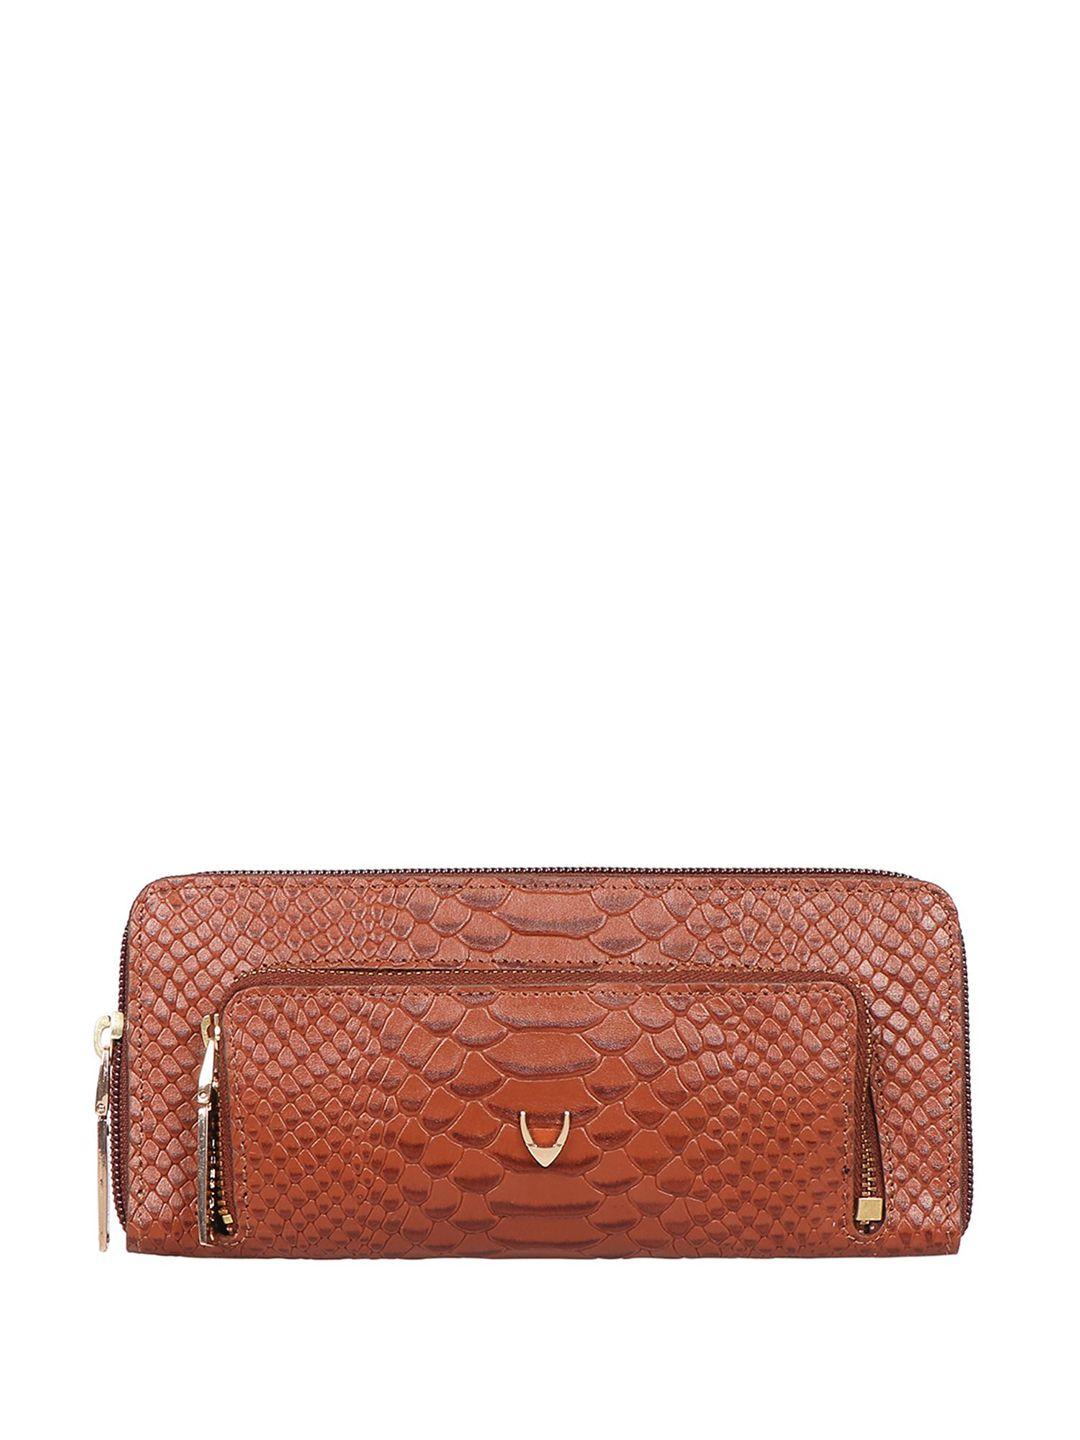 hidesign-textured-leather-purse-clutch